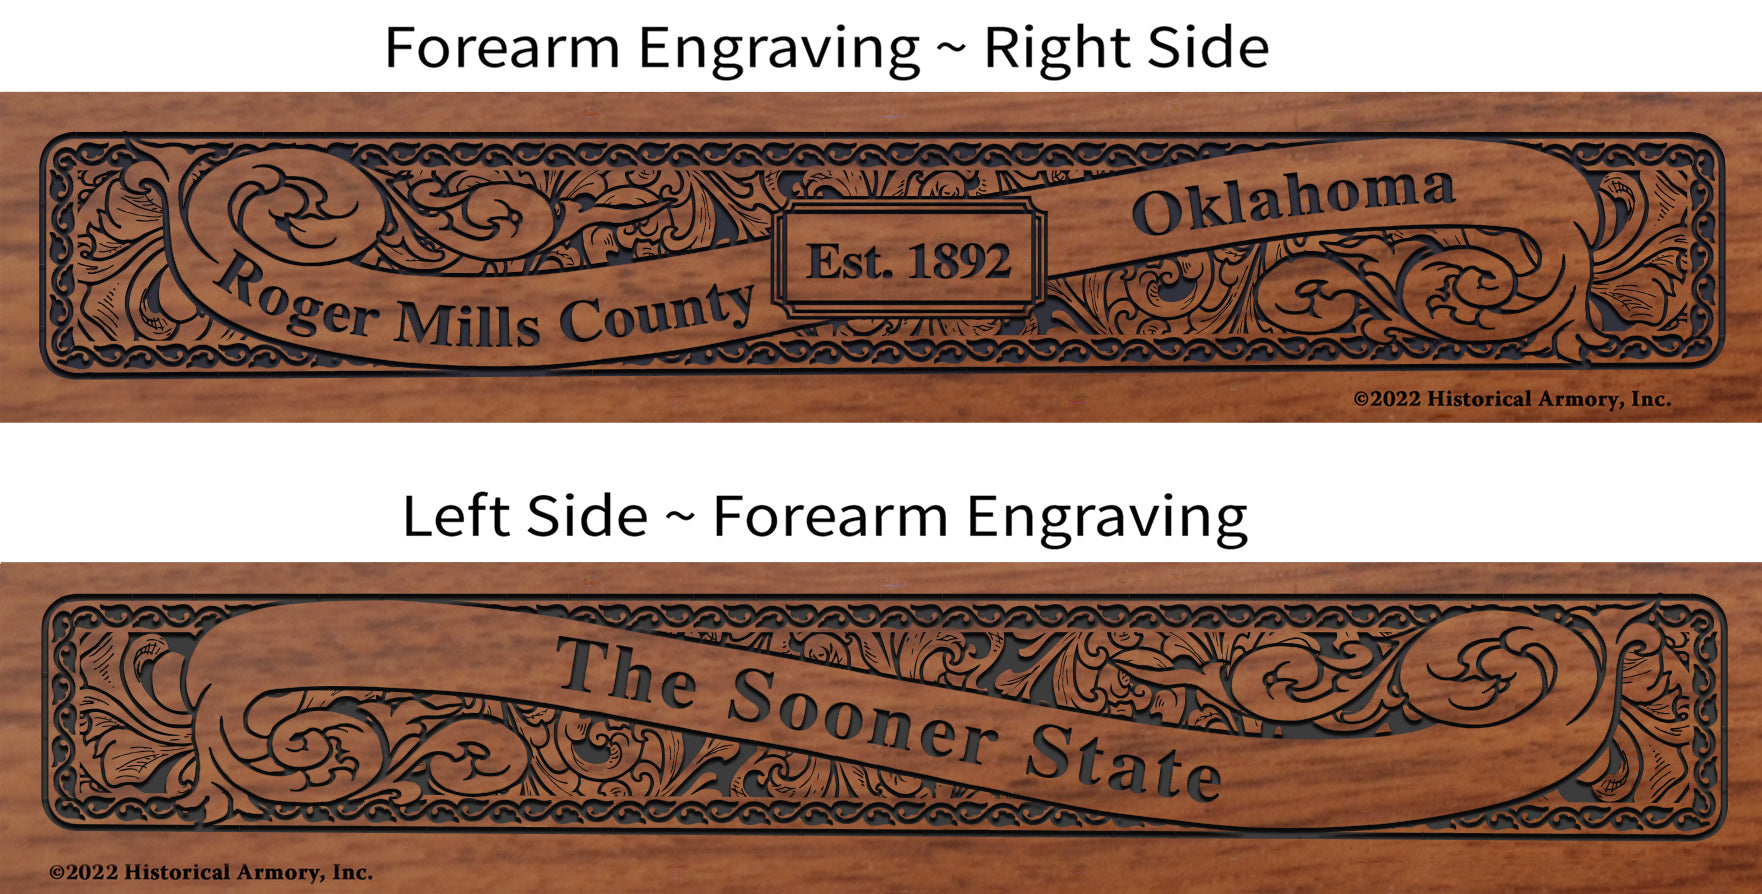 Roger Mills County Oklahoma Engraved Rifle Forearm